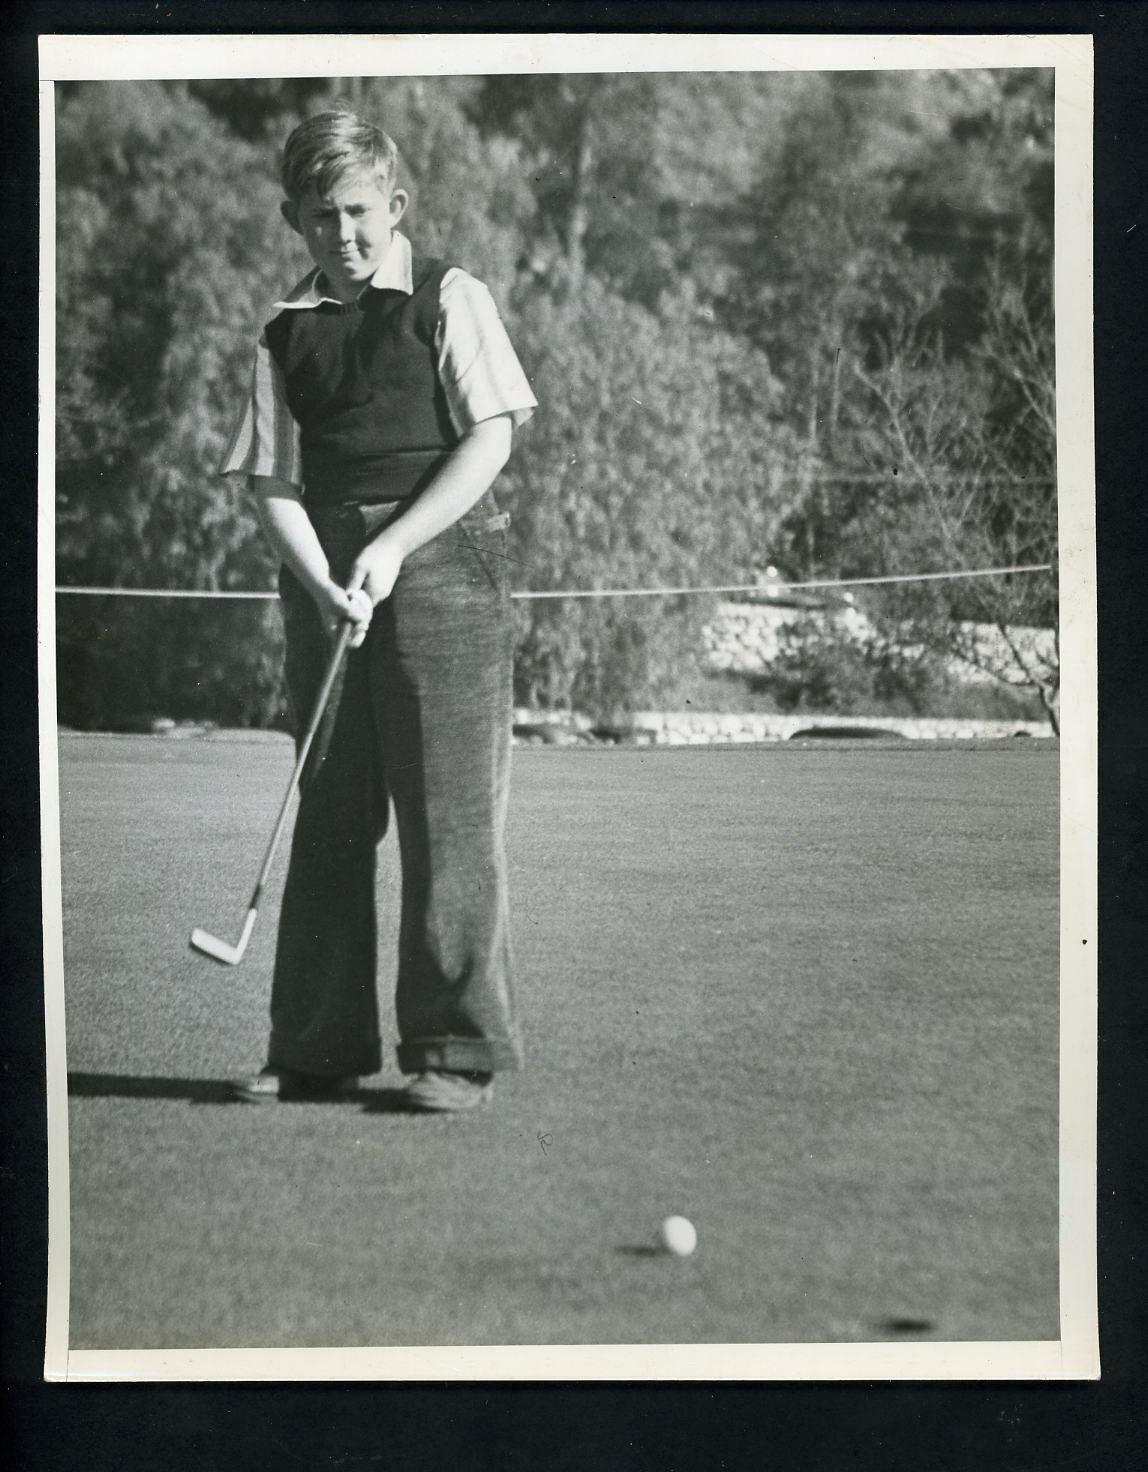 12 year old Bob Rosburg putting 1939 golf Press Photo Poster painting